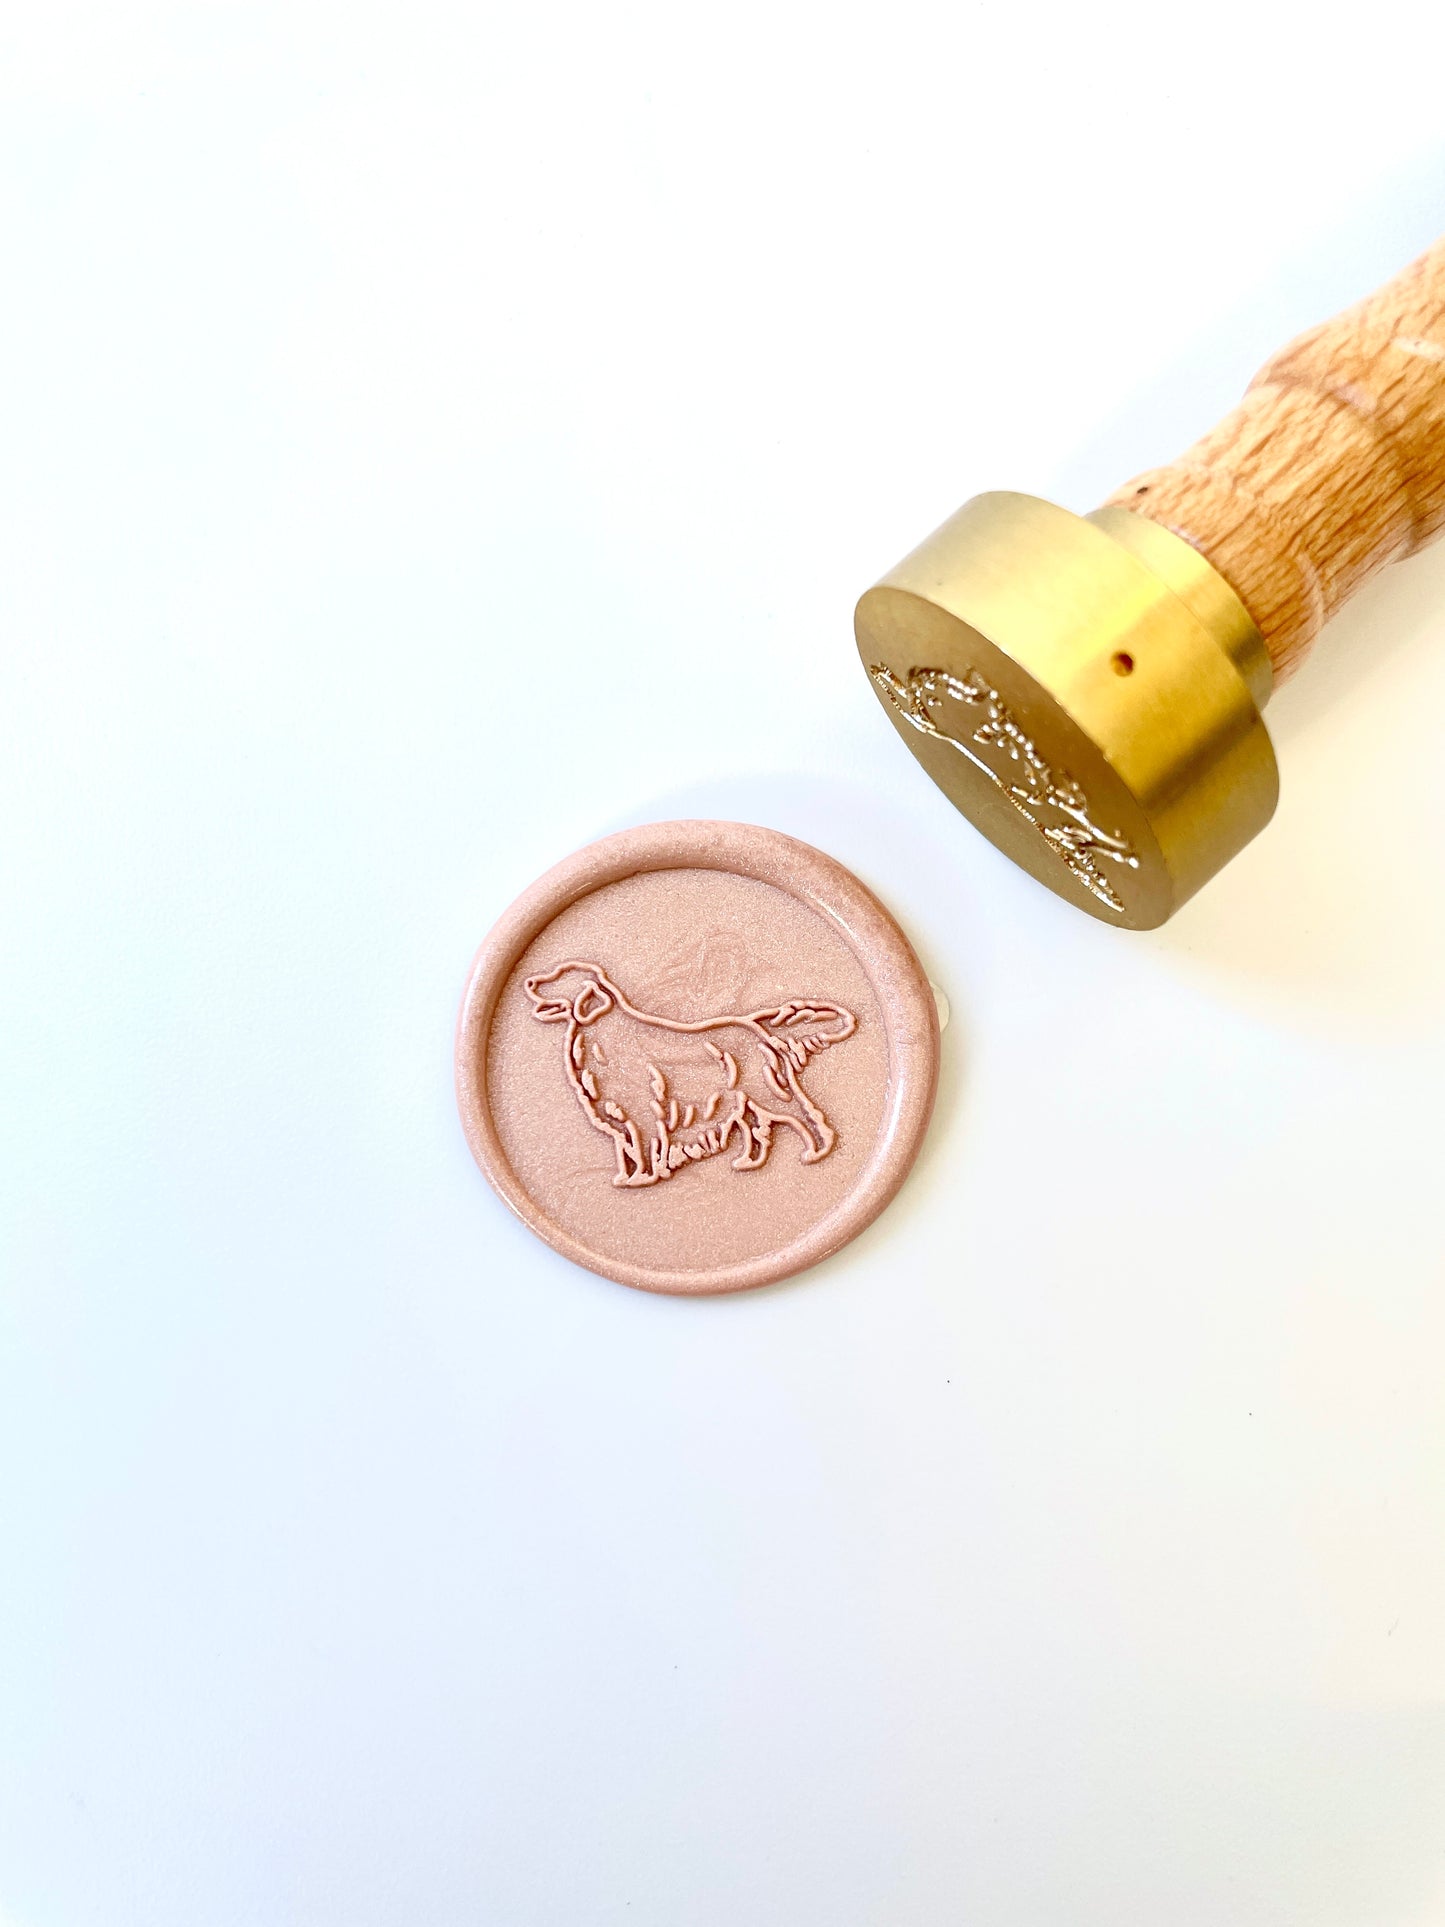 Golden Retriever Wax Seal Stamp (Dog Series)